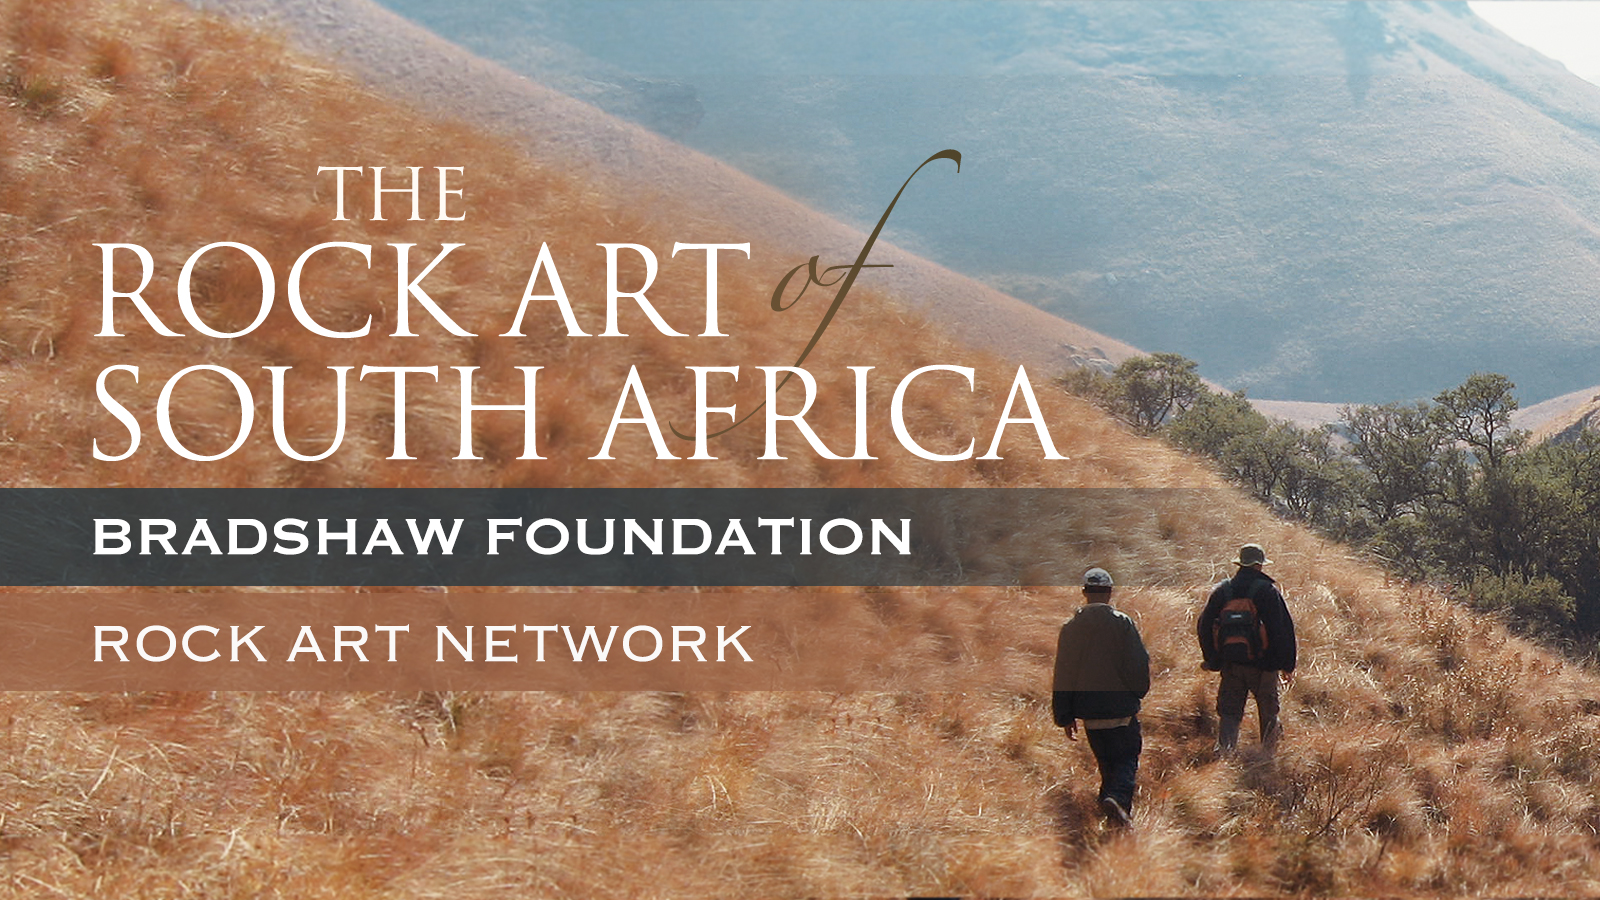 San Rock Art of the Drakensberg South Africa